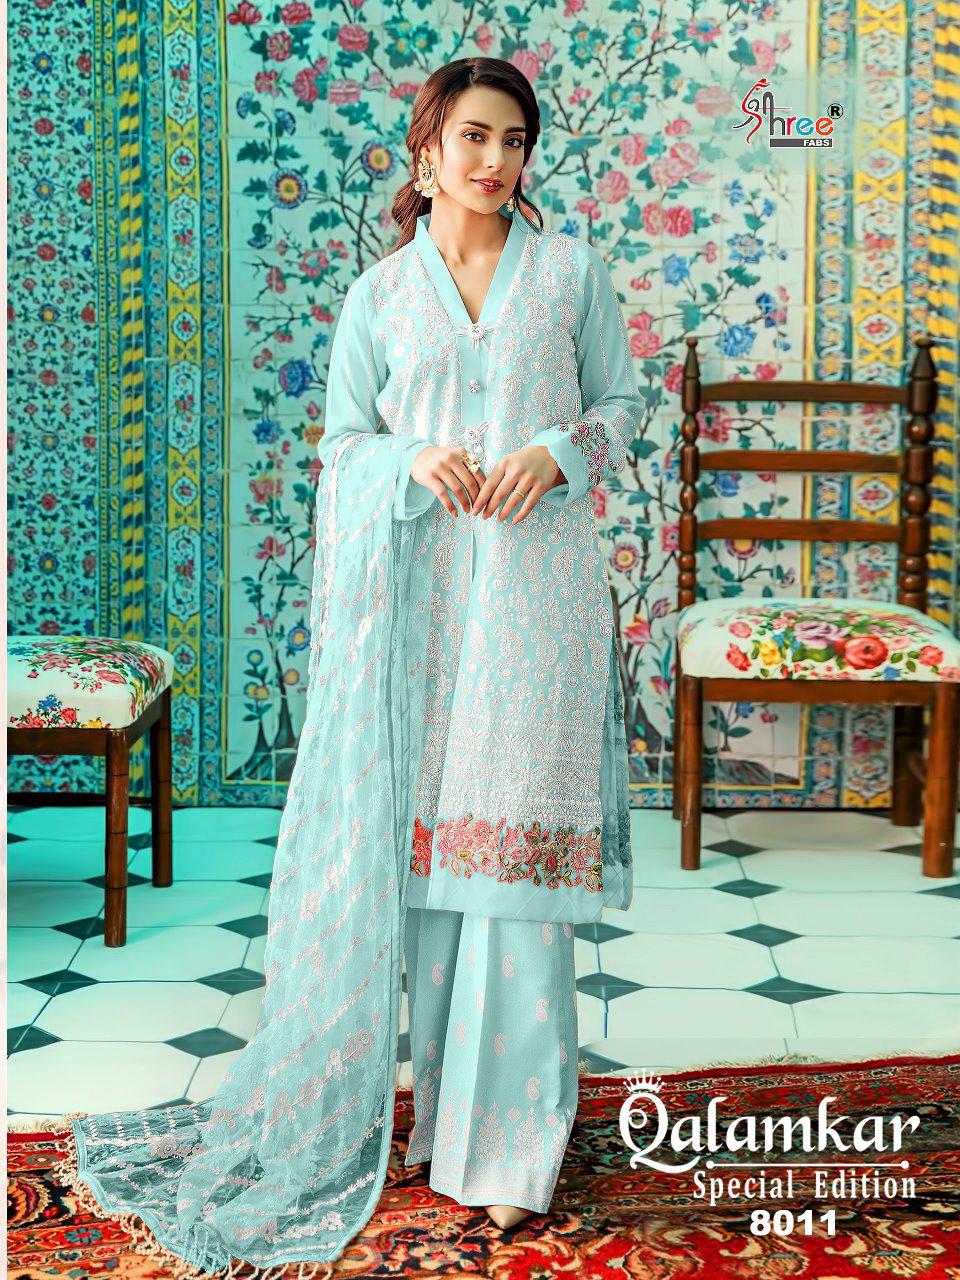 Shree fabs qalamkar special edition cotton embroidered salwar kameez collection